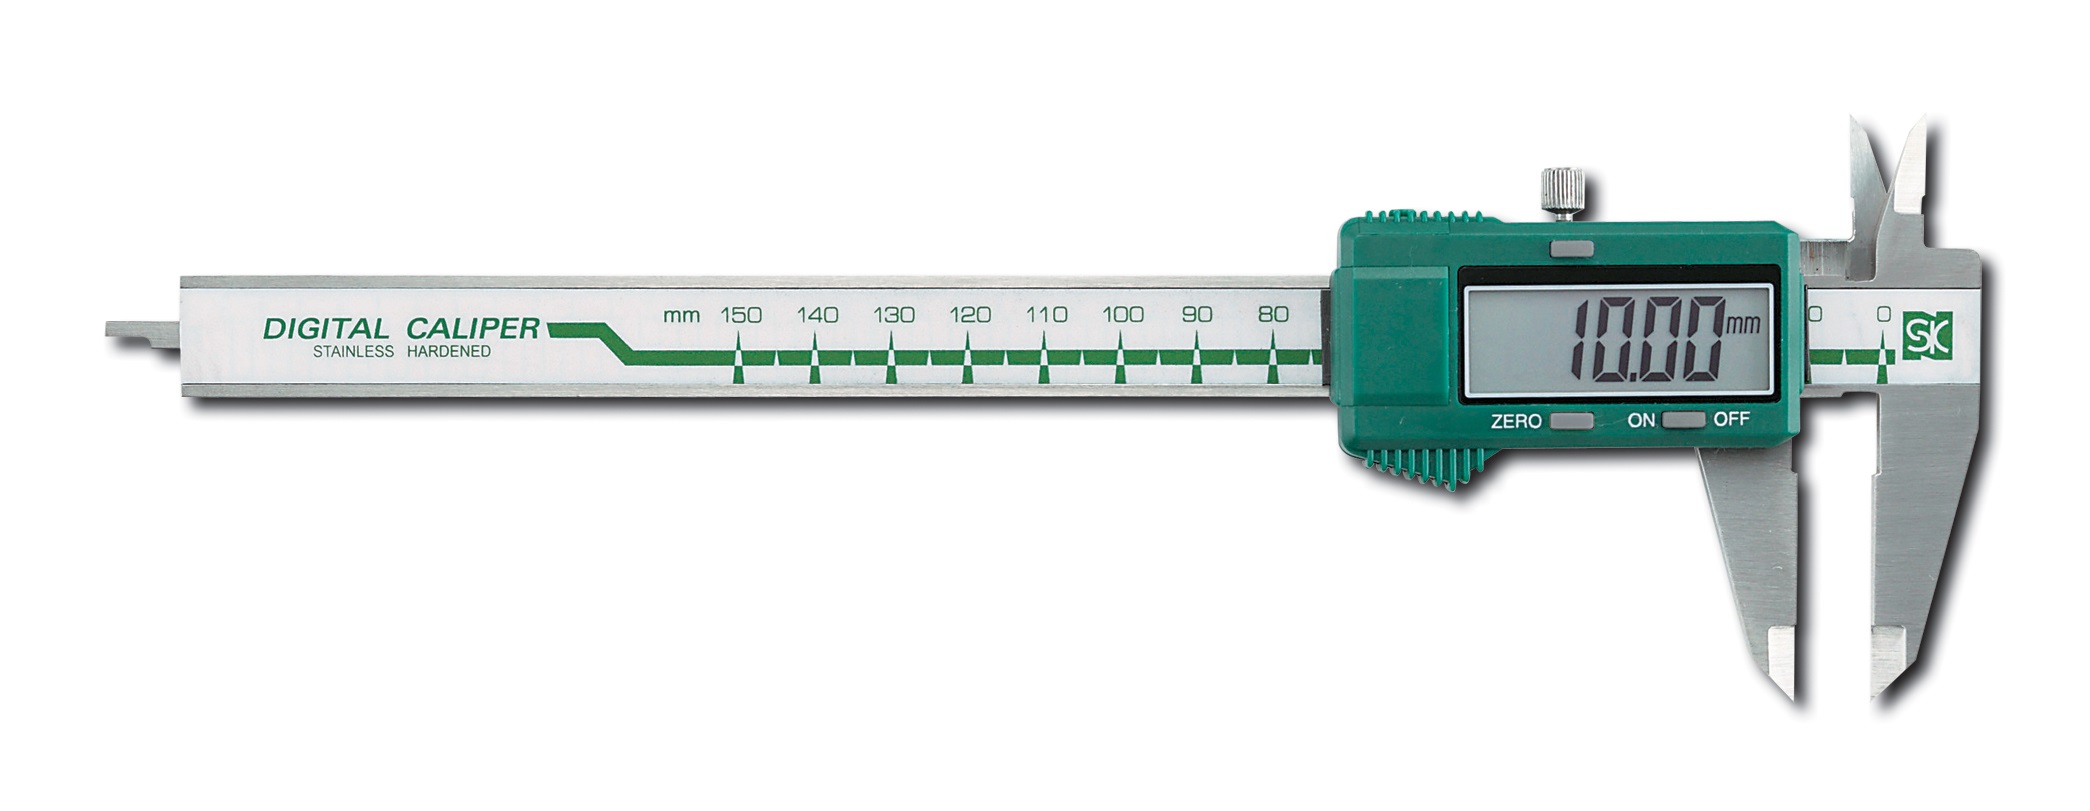 Plastic Dial Vernier Caliper Ruler Gauge Imperial Standard Measuring Tool 0.1mm Read Value Dial Calipers 150mm Yellow